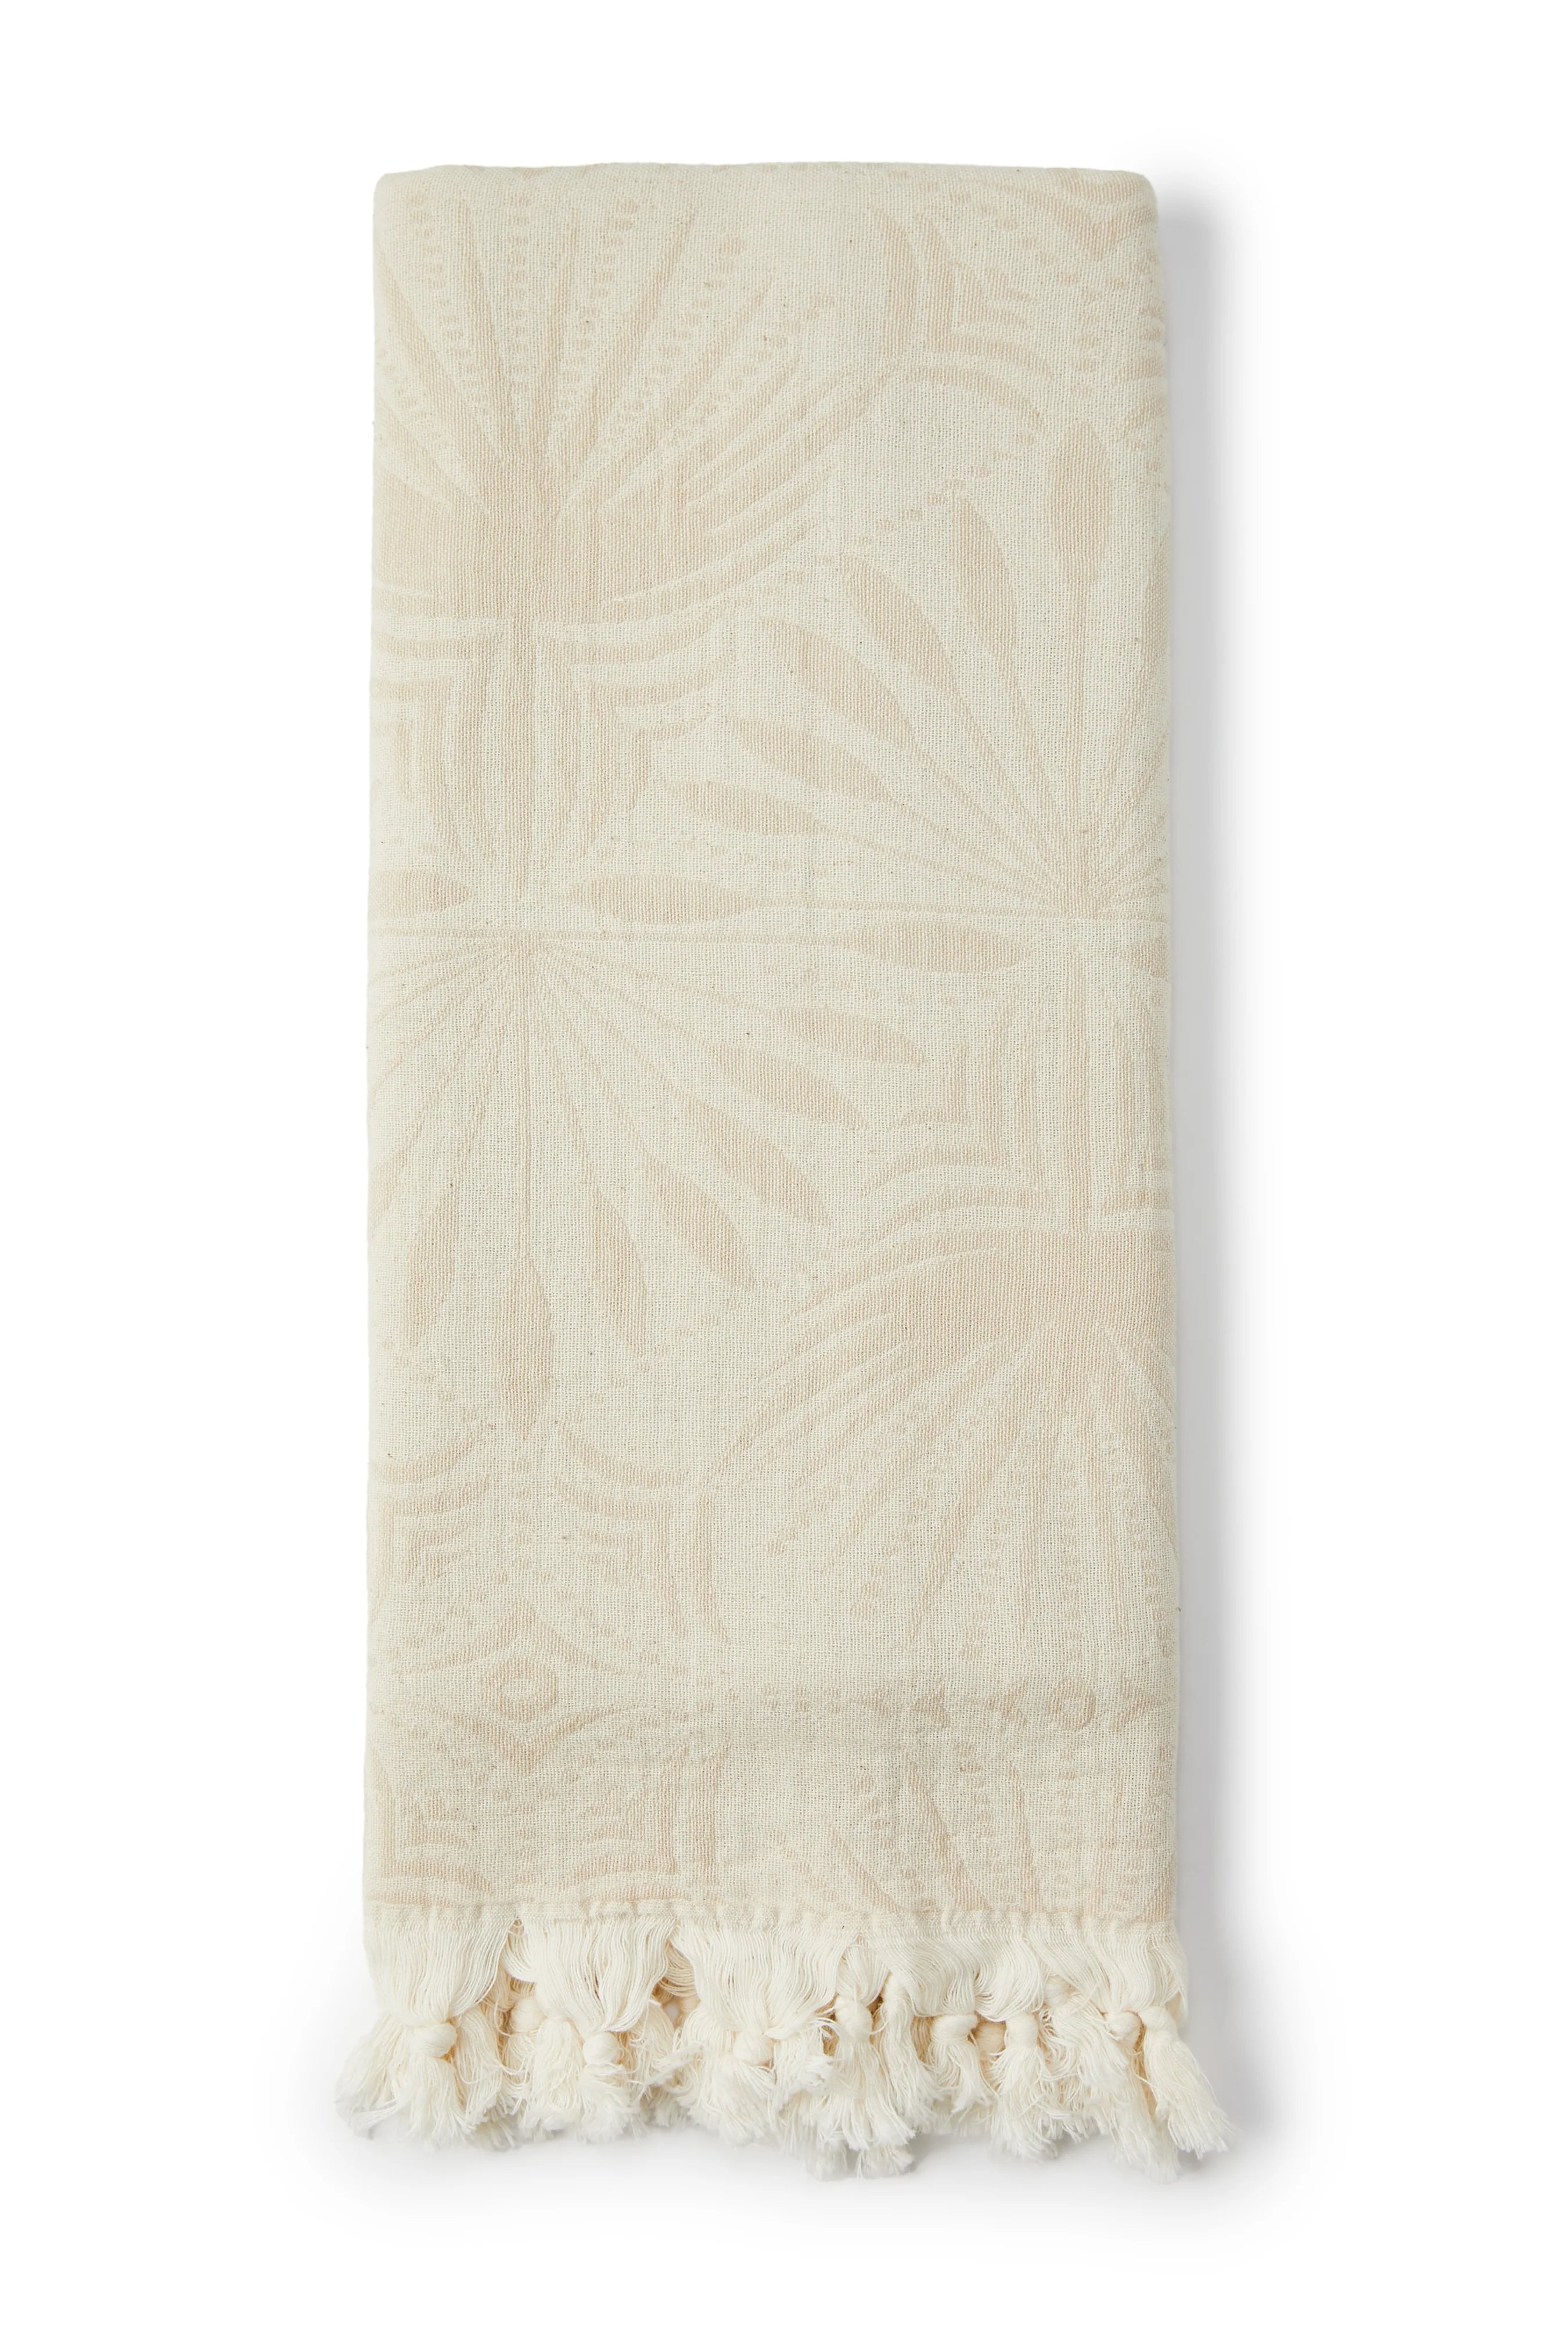 Palm Frond Towel - Beige